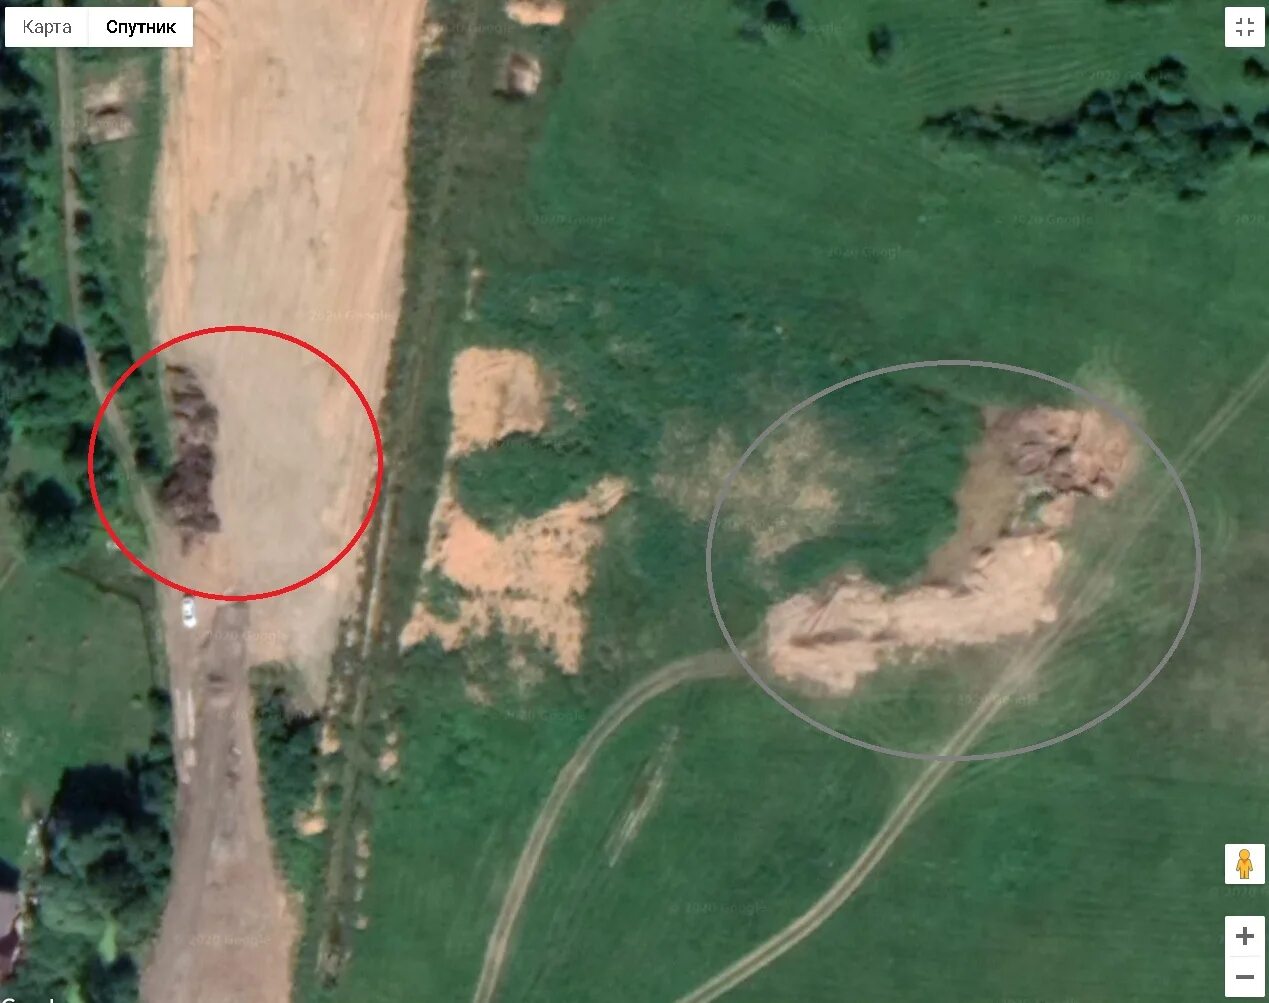 Спутник где сделан. Четкие снимки со спутника. Снимки со спутника село. Съемка со спутника. Съемка местности со спутника.